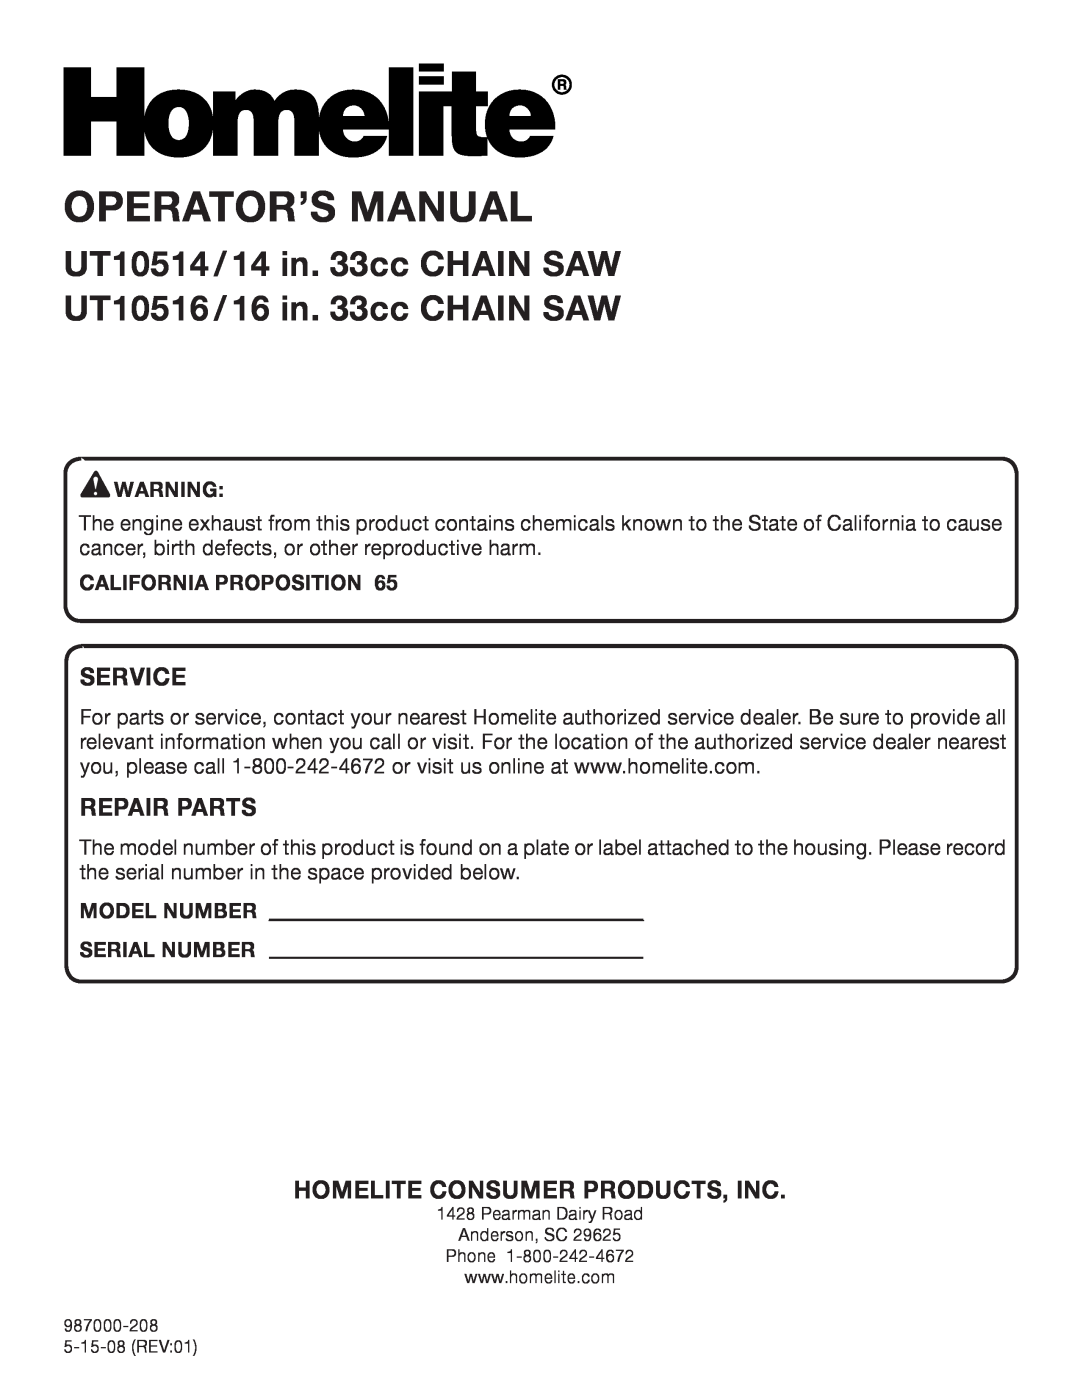 Homelite UT10516/16 IN. 33CC manual Service, Repair Parts, Homelite Consumer Products, Inc, California Proposition 